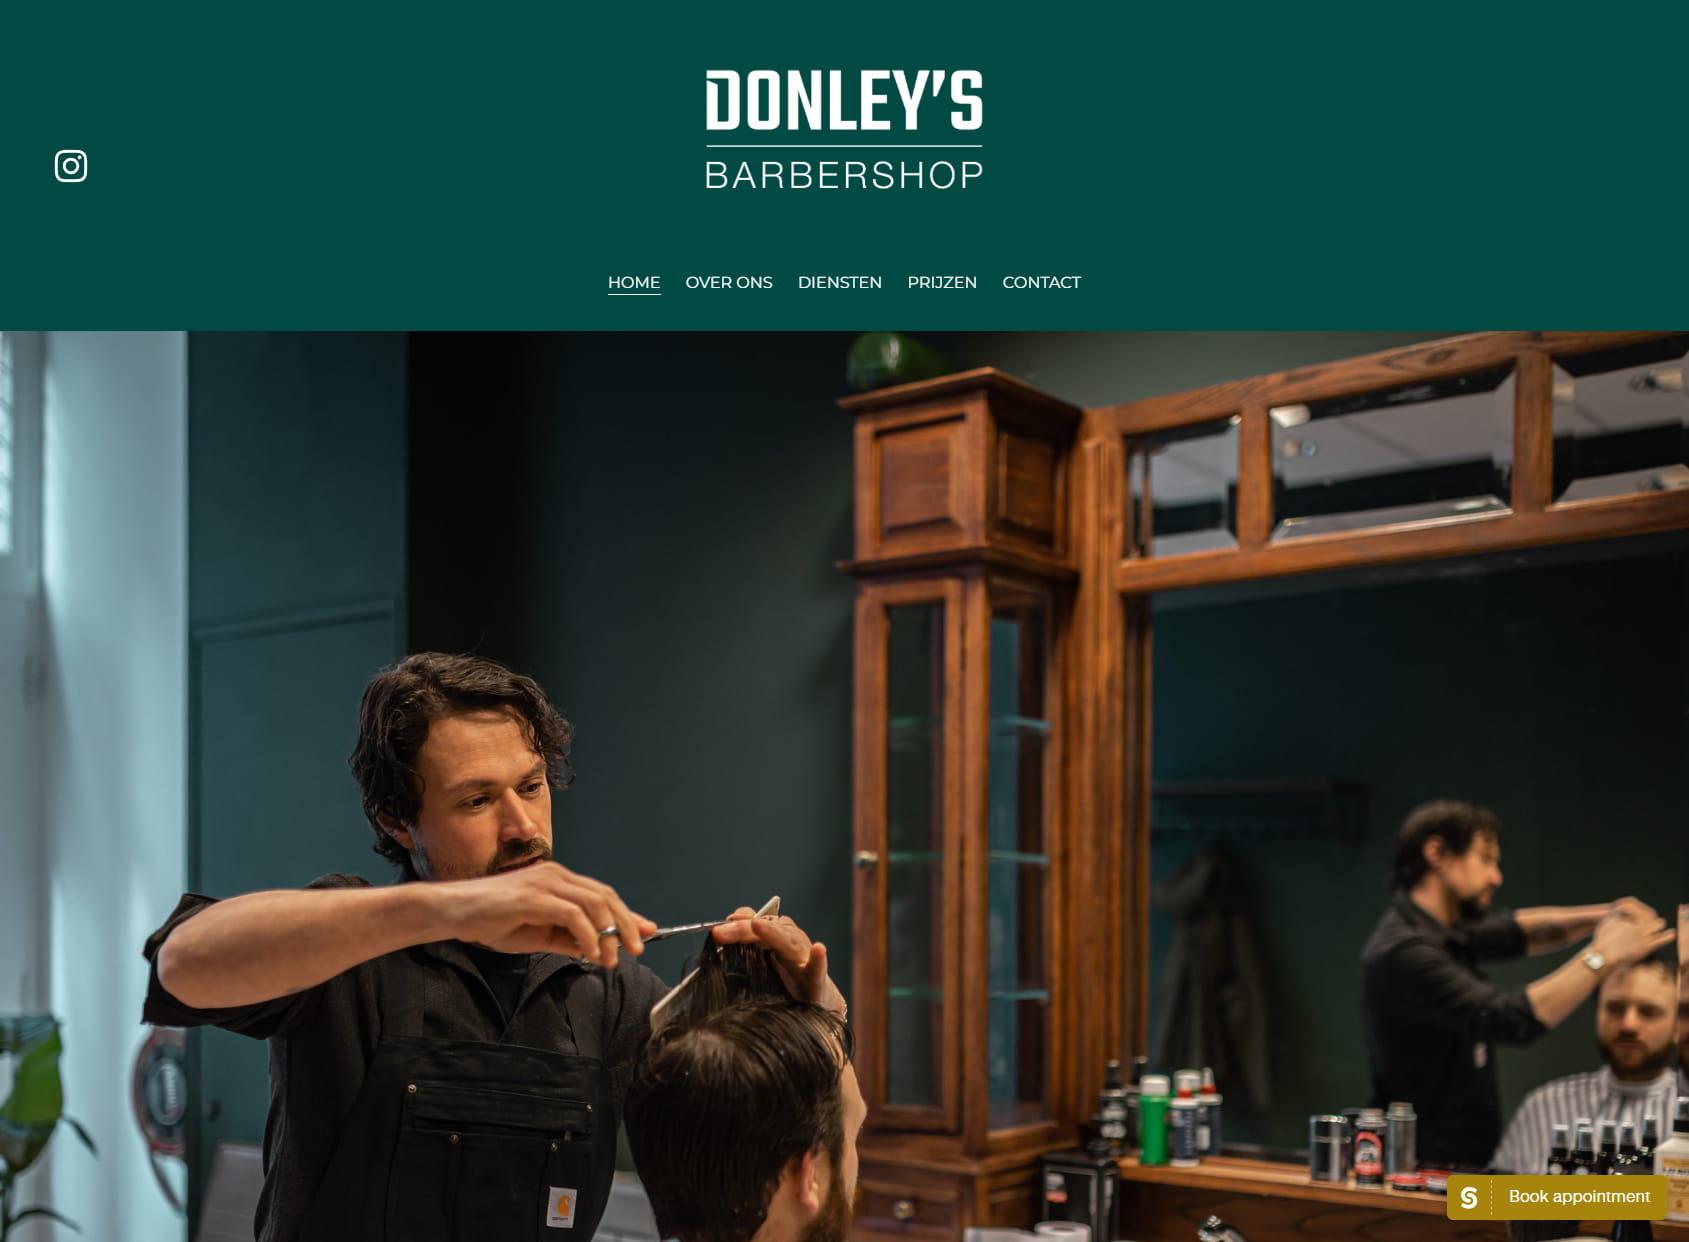 Donley's Barbershop